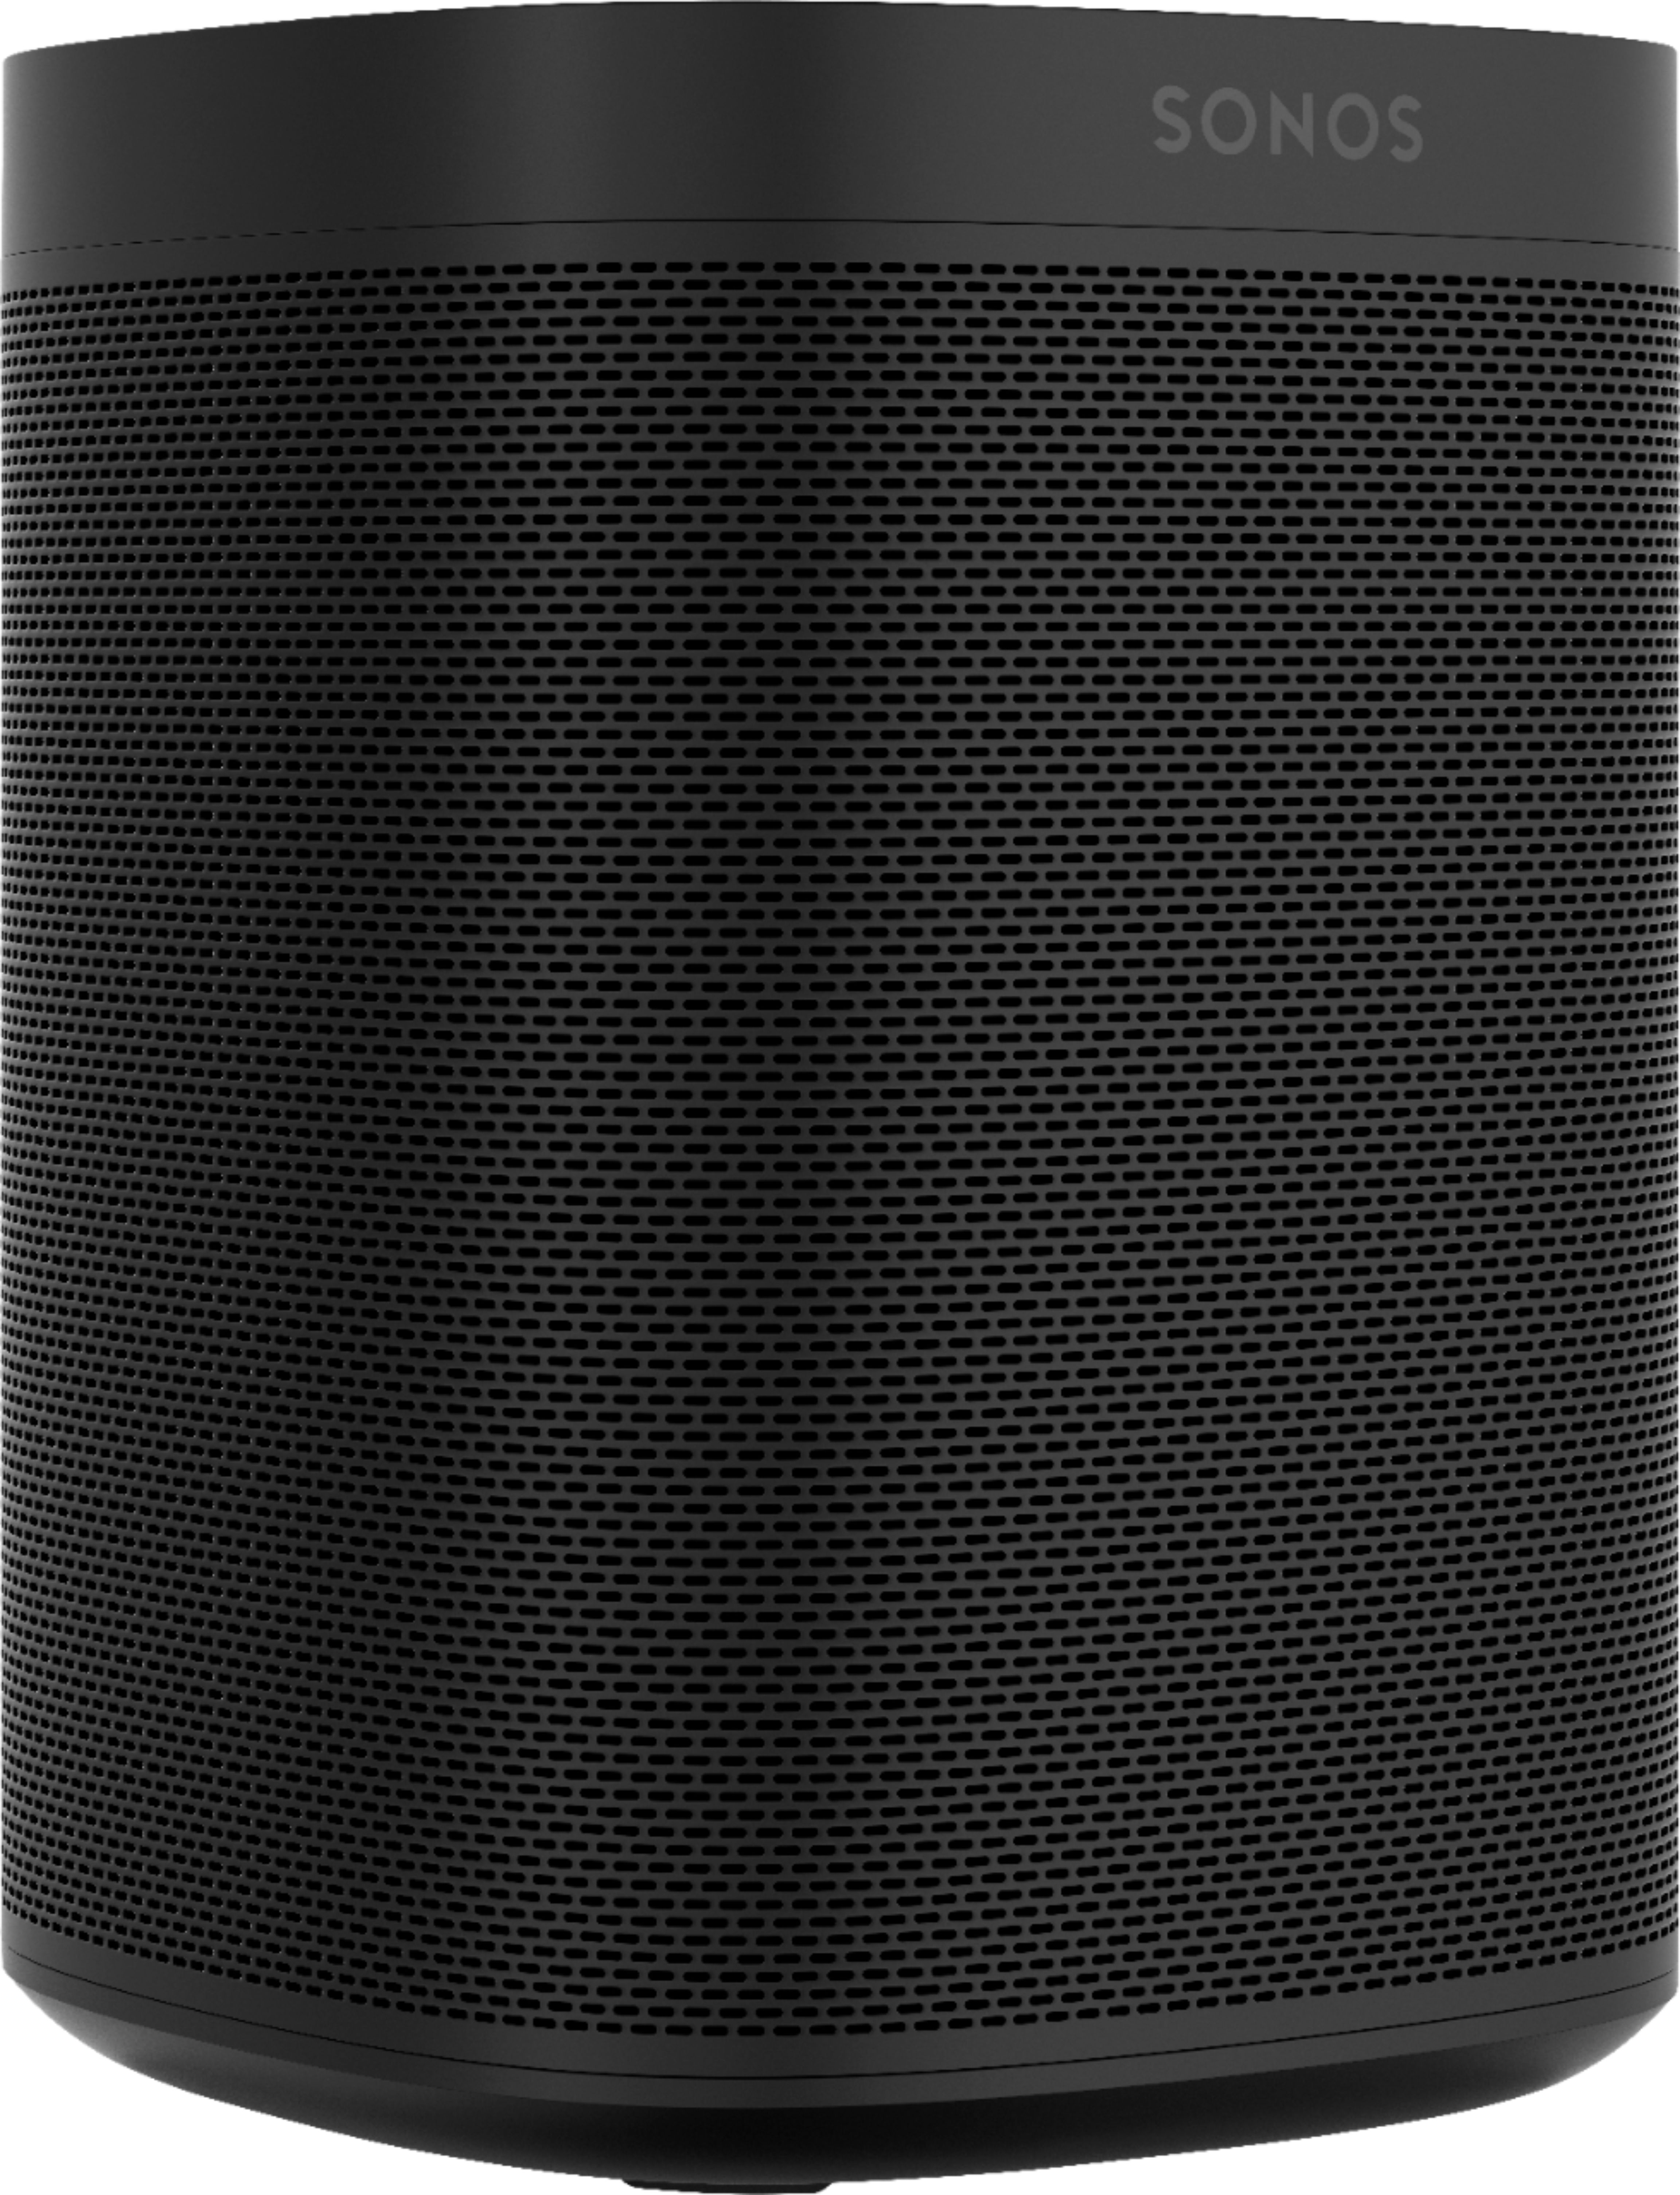 Angle View: Sonos - Geek Squad Certified Refurbished One SL Wireless Smart Speaker - Black